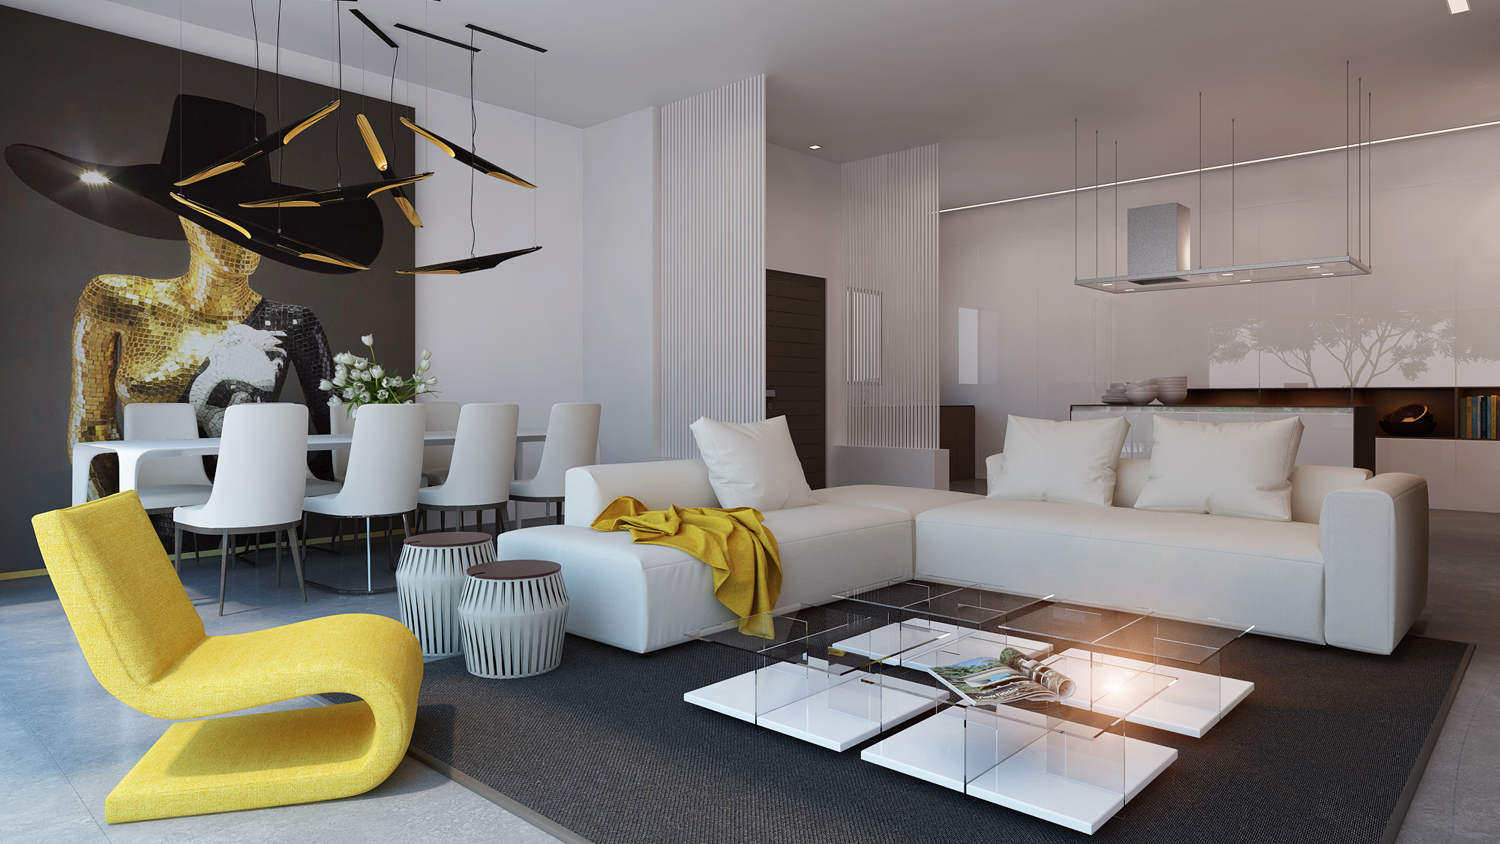 Design ideas for the living room "width =" 1500 "height =" 844 "srcset =" https://mileray.com/wp-content/uploads/2020/05/Creative-Design-Ideas-For-Living-Room-With-Luxury-And-Modern.jpg 1500w, https: // myfashionos .com / wp-content / uploads / 2016/08 / Alla-Kogan-1-300x169.jpg 300w, https://mileray.com/wp-content/uploads/2016/08/Alla-Kogan-1-768x432. jpg 768w, https://mileray.com/wp-content/uploads/2016/08/Alla-Kogan-1-1024x576.jpg 1024w, https://mileray.com/wp-content/uploads/2016/08 / Alla-Kogan-1-696x392.jpg 696w, https://mileray.com/wp-content/uploads/2016/08/Alla-Kogan-1-1068x601.jpg 1068w, https://mileray.com/wp - content / uploads / 2016/08 / Alla-Kogan-1-746x420.jpg 746w "sizes =" (maximum width: 1500px) 100vw, 1500px